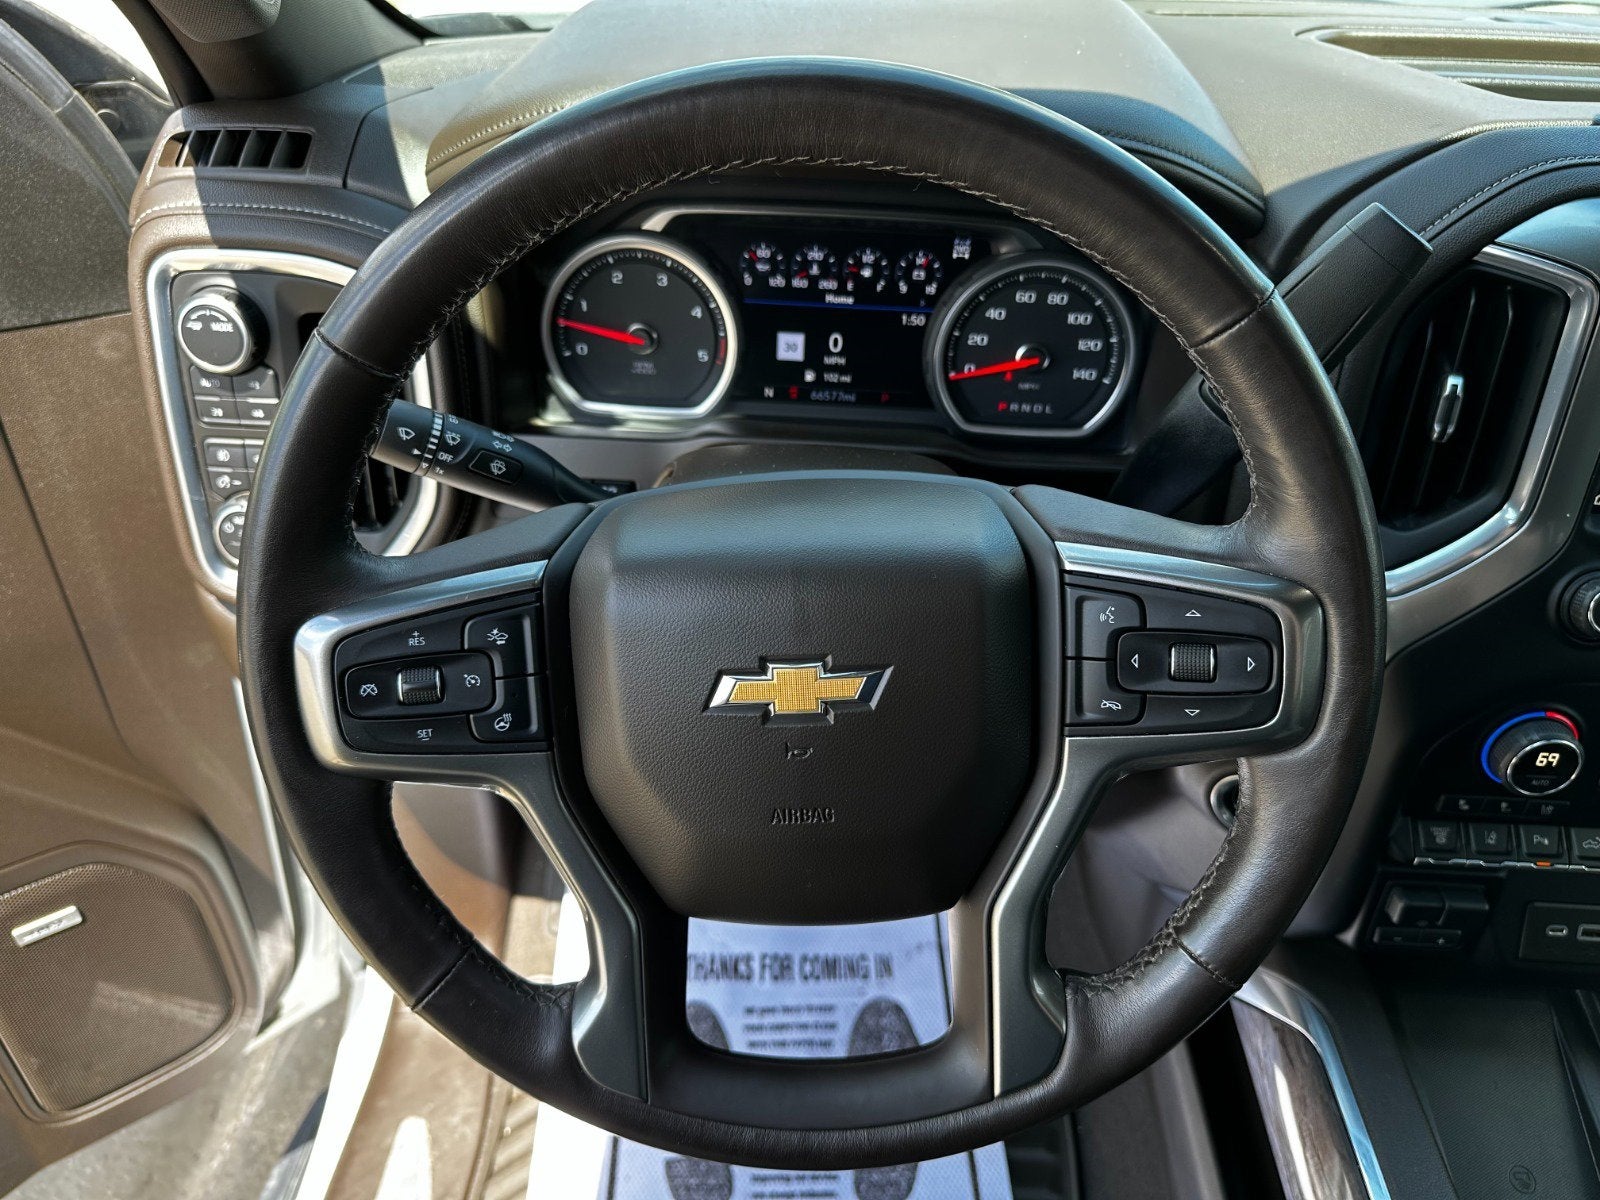 2021 Chevrolet Silverado 2500 HD LTZ, Tech Pkg, Convenience Pkg I & II